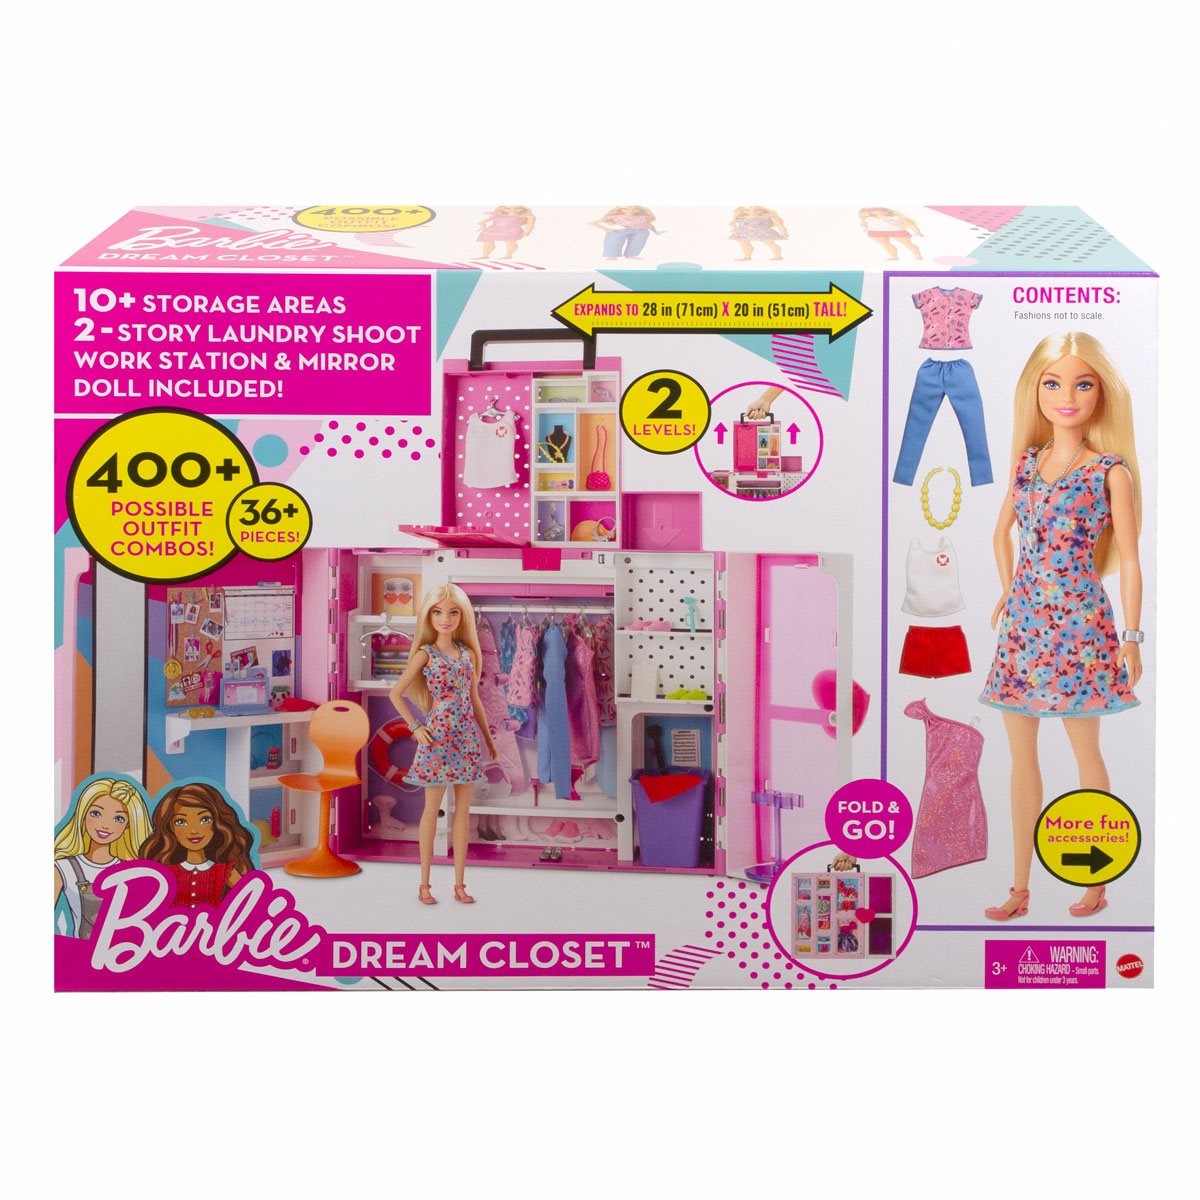 Belachelijk Praten spiritueel Barbie Dream Closet 2.0 Playset with Doll